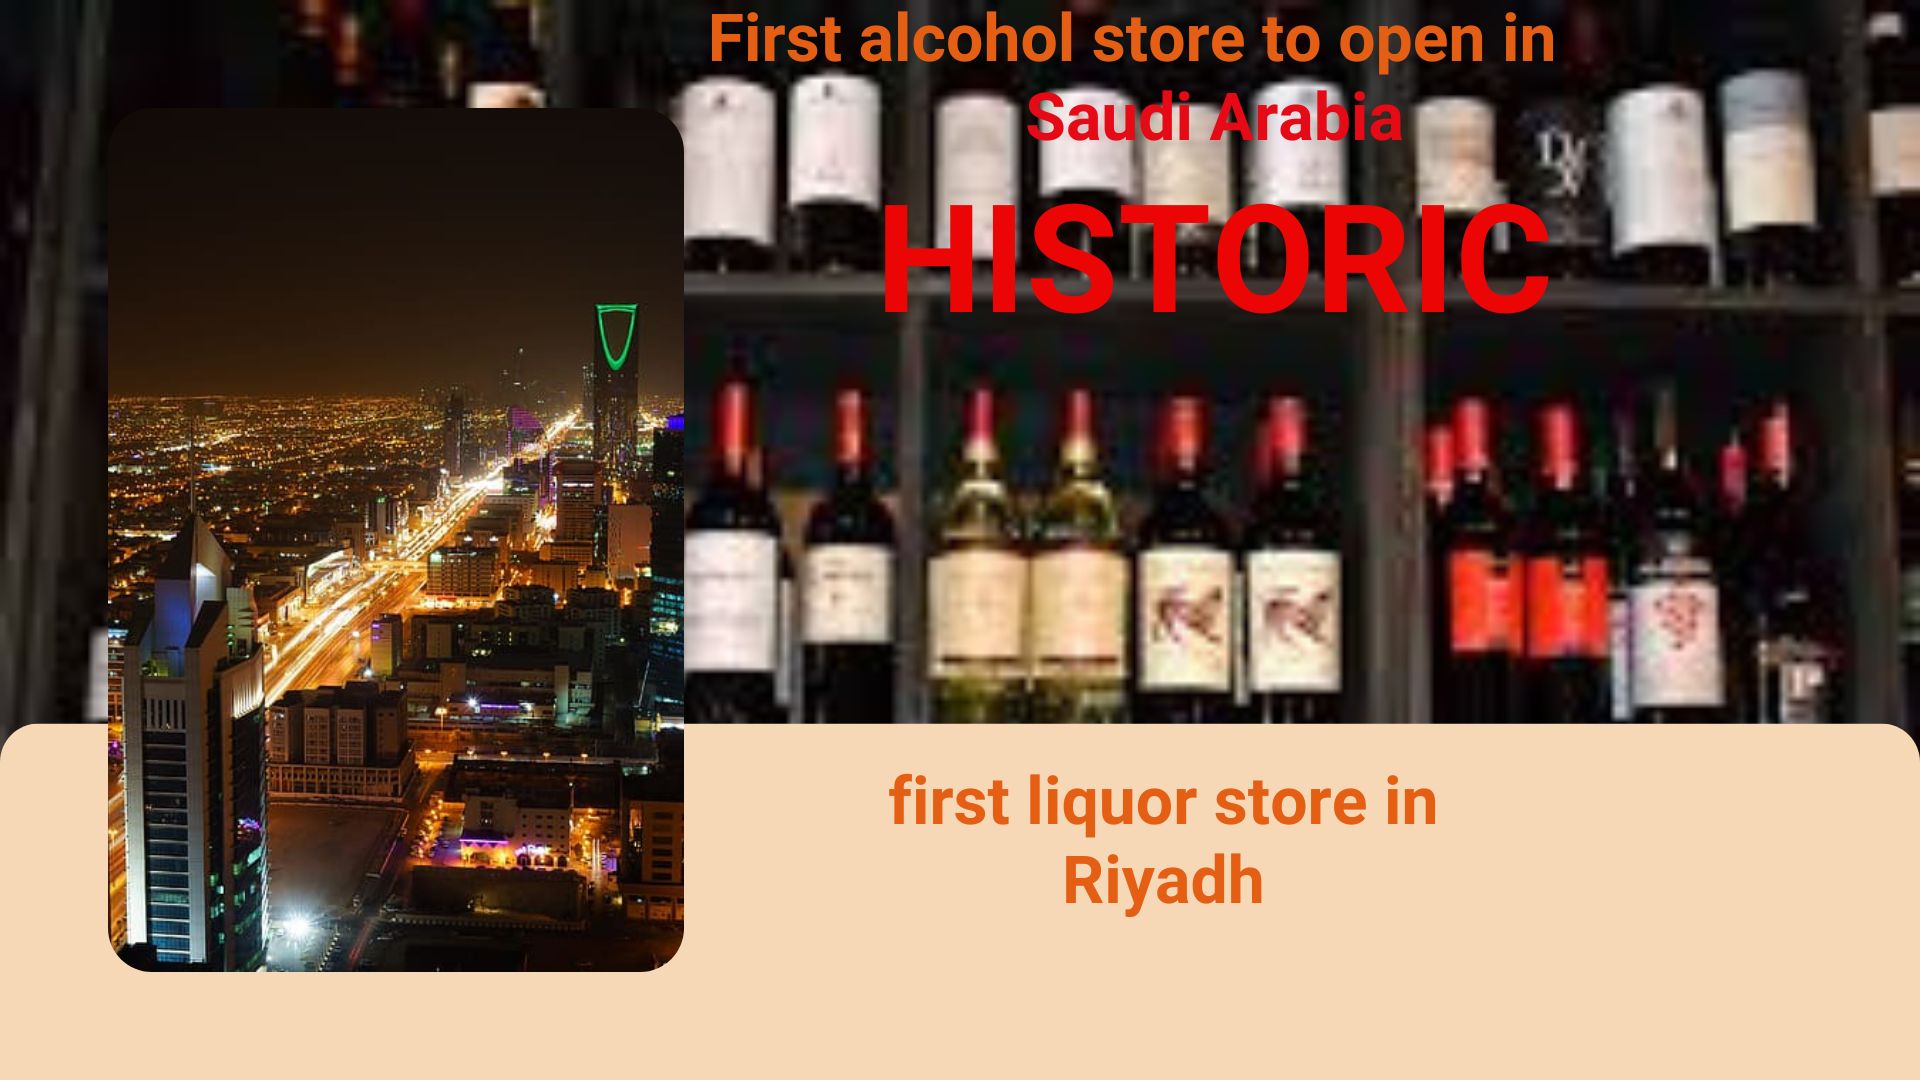 First alcohol store to open in Saudi Arabia, liquor